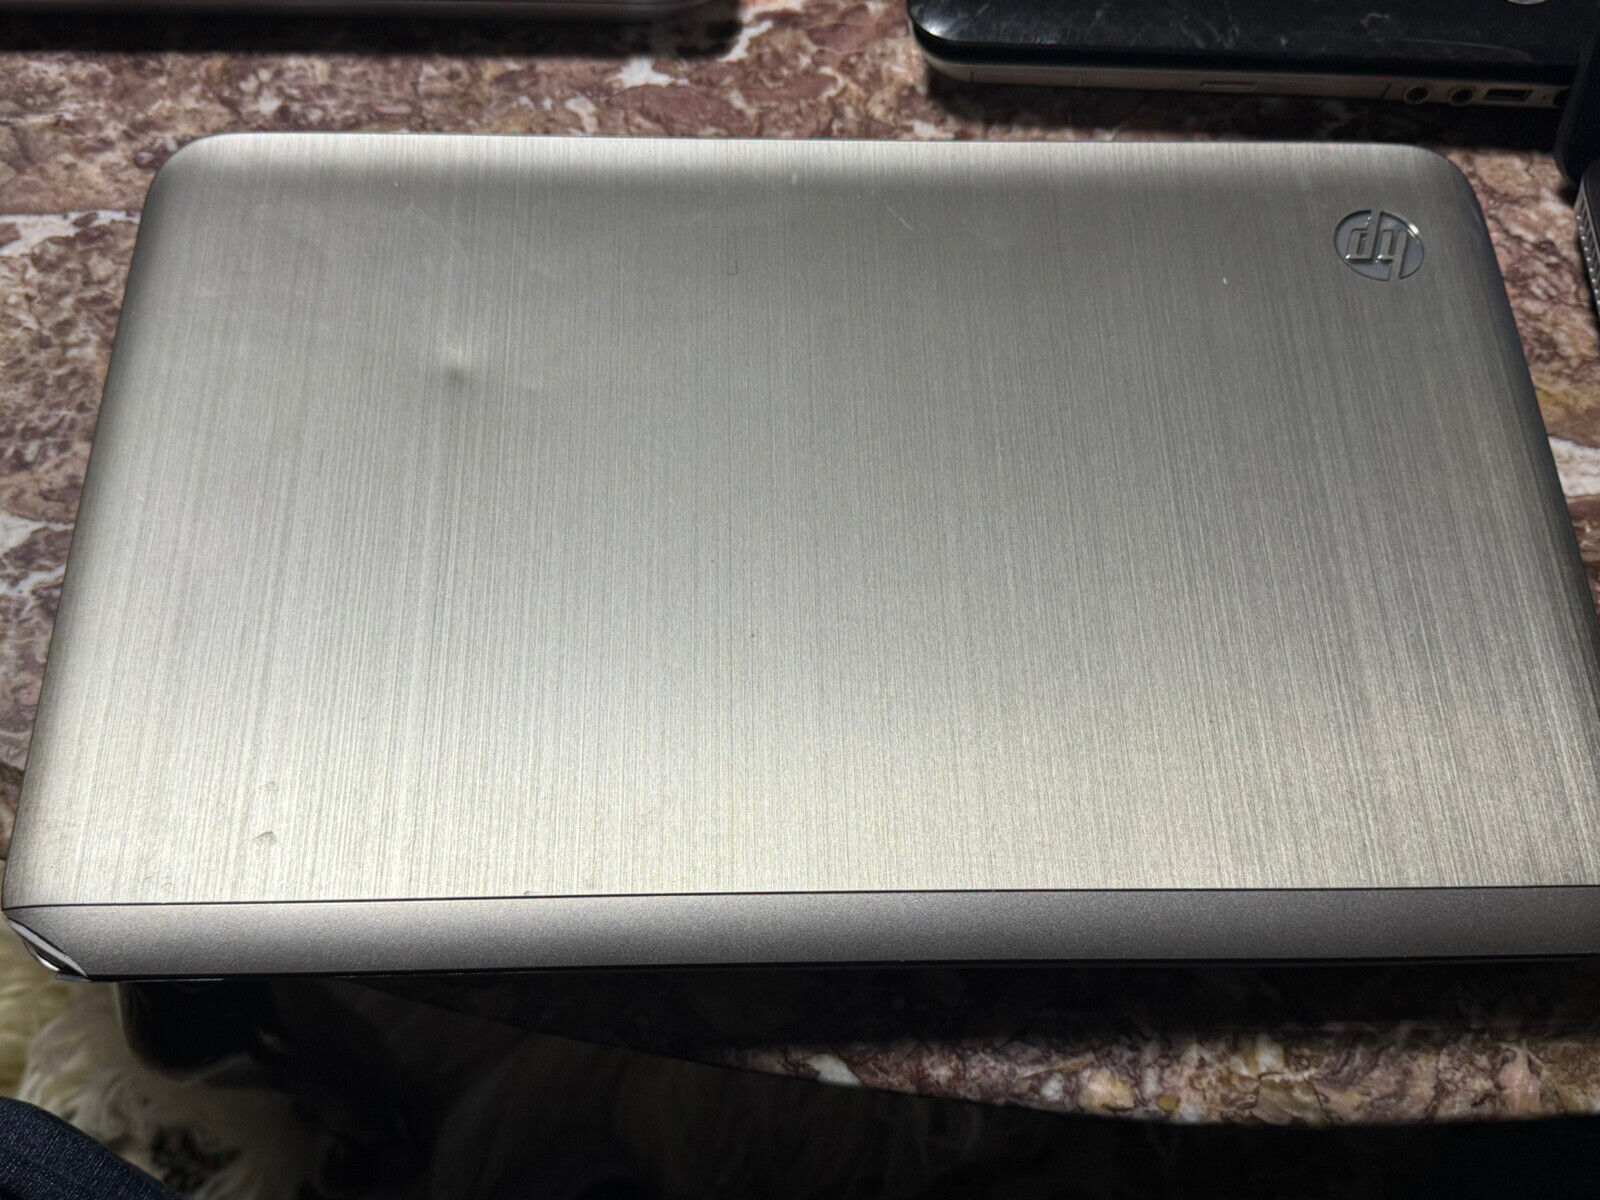 HP PAVILION DV6 - 8GB Ram Laptop - Windows 7 Home Premium - Beats Audio